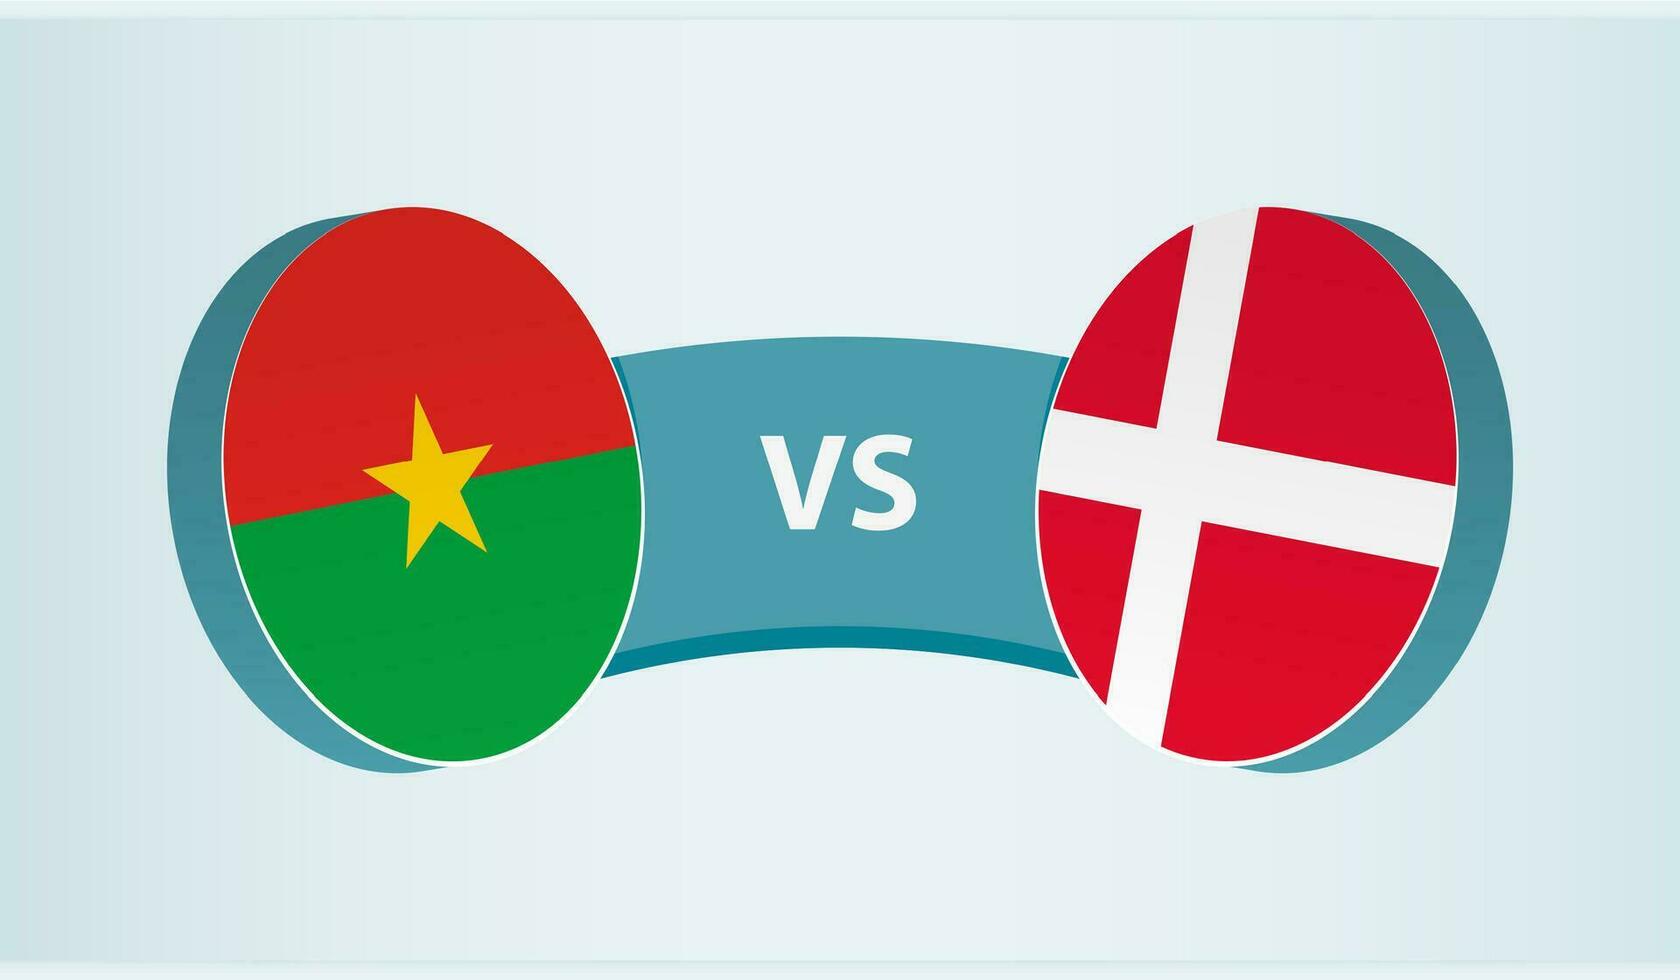 Burkina Faso versus Denmark, team sports competition concept. vector